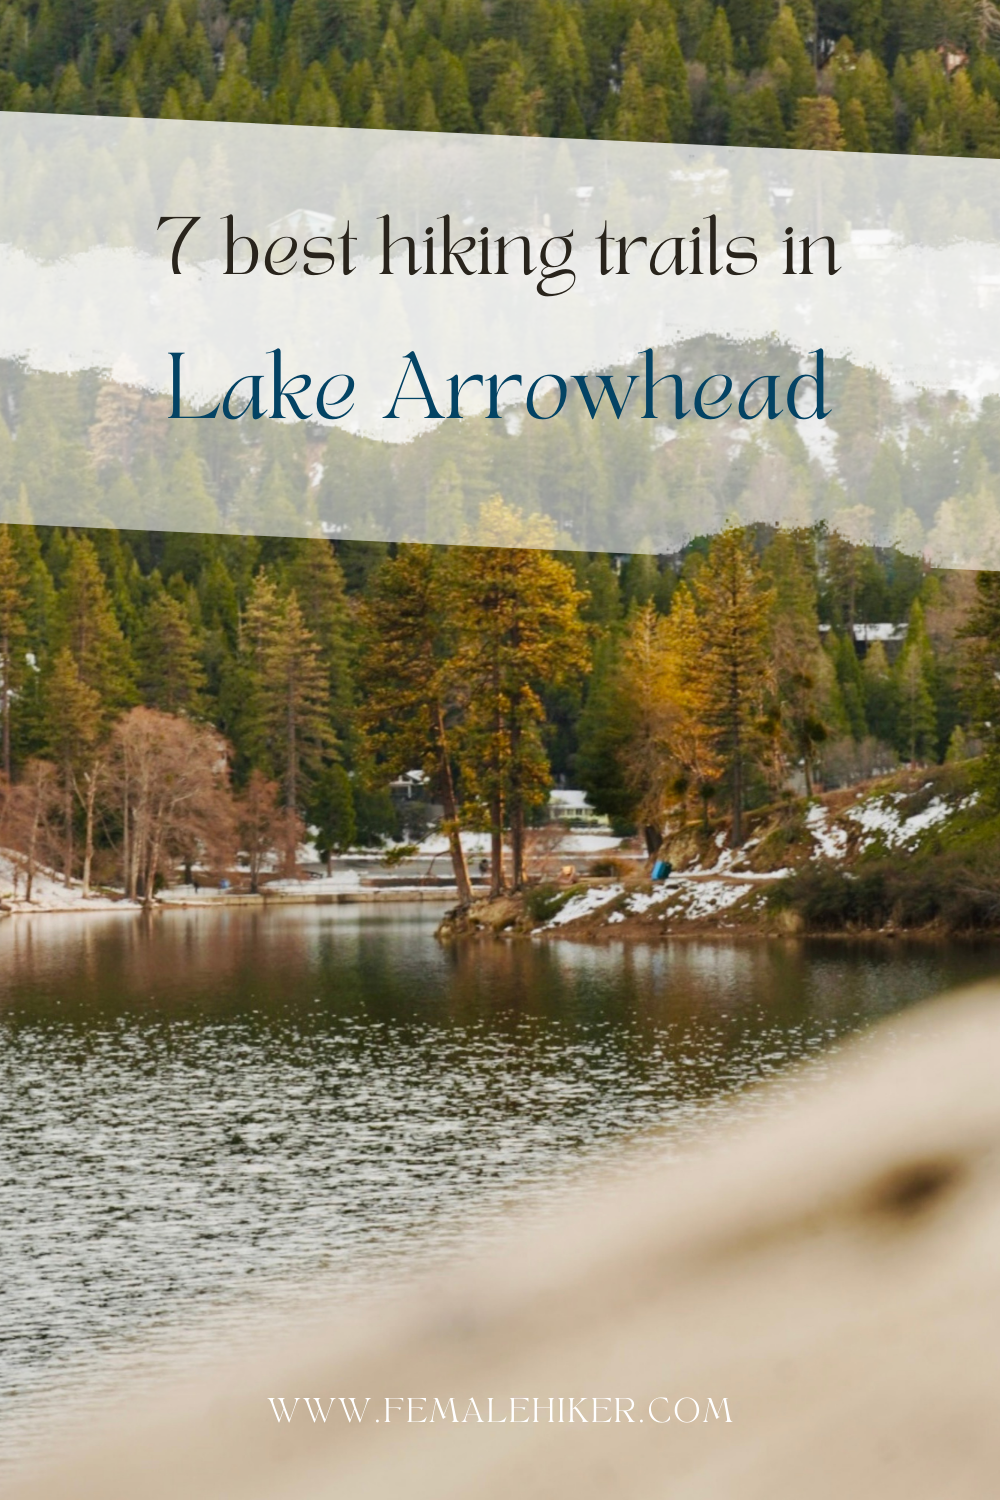 7 Best Lake Arrowhead Hiking Trails 36